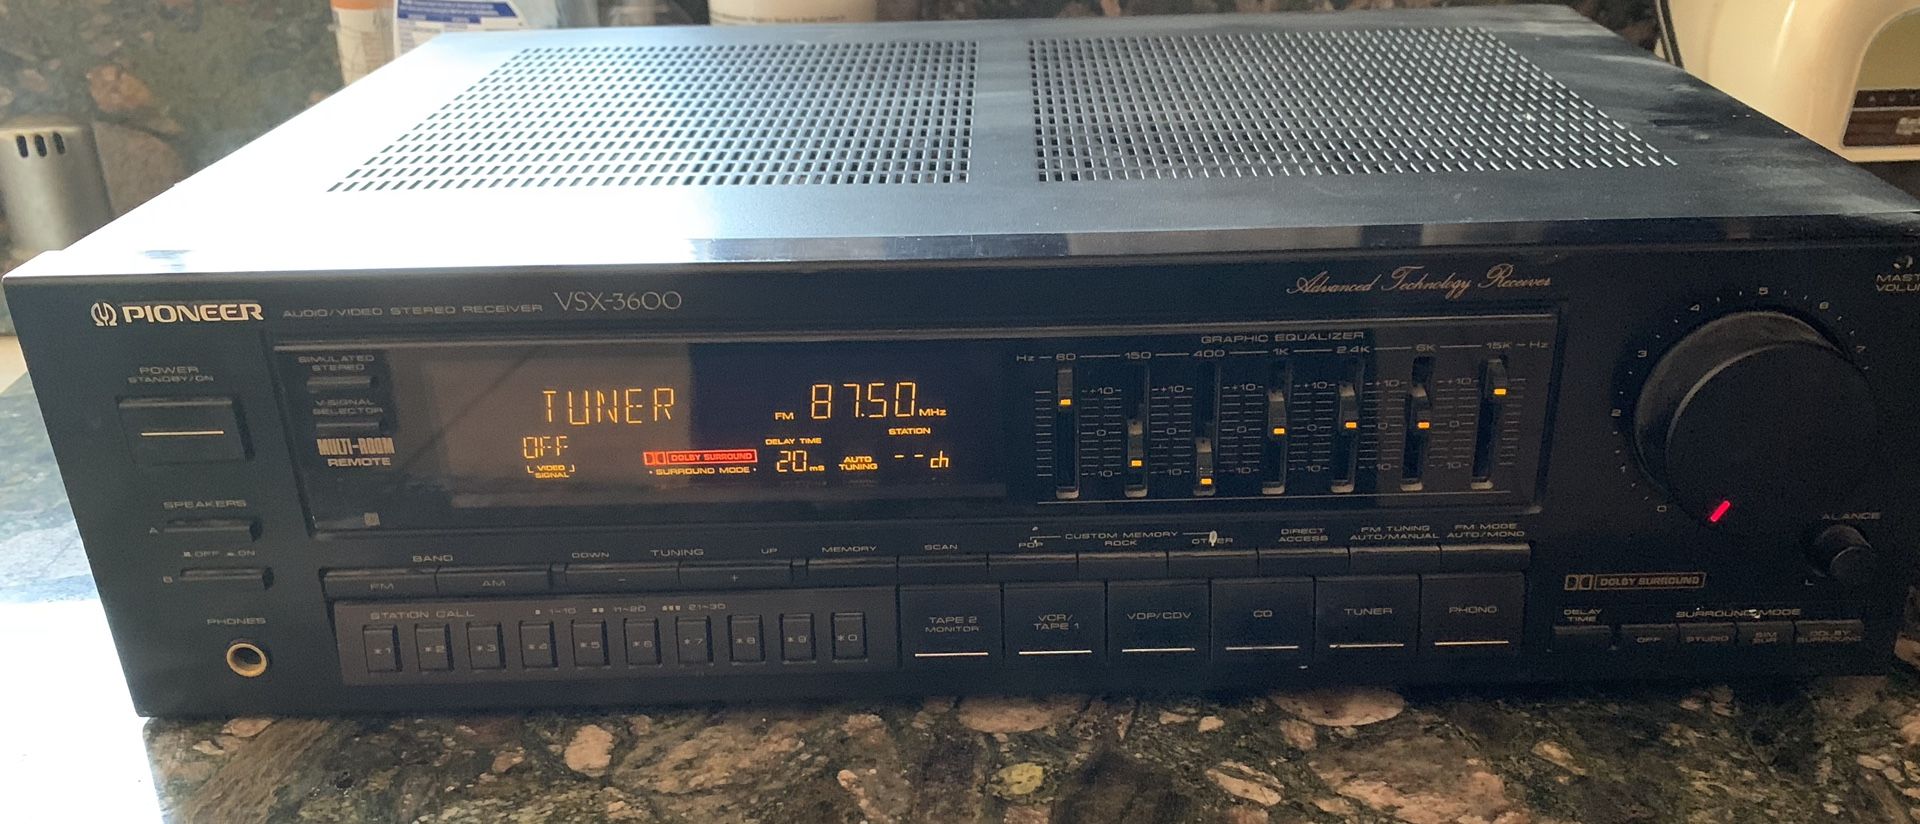 Pioneer Stereo Receiver VSX-3600